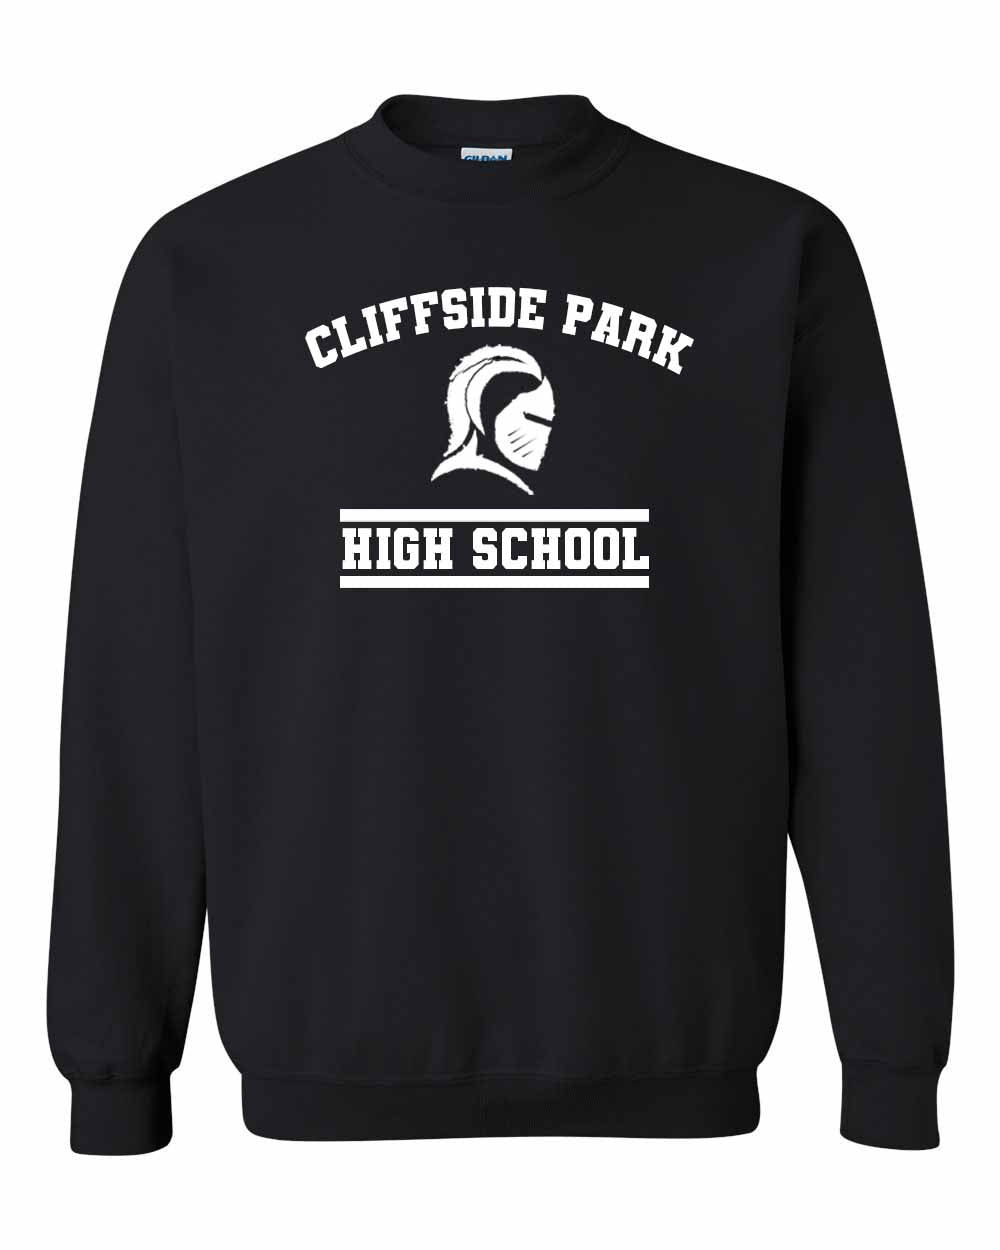 Cliffside Park High School non hooded sweatshirt